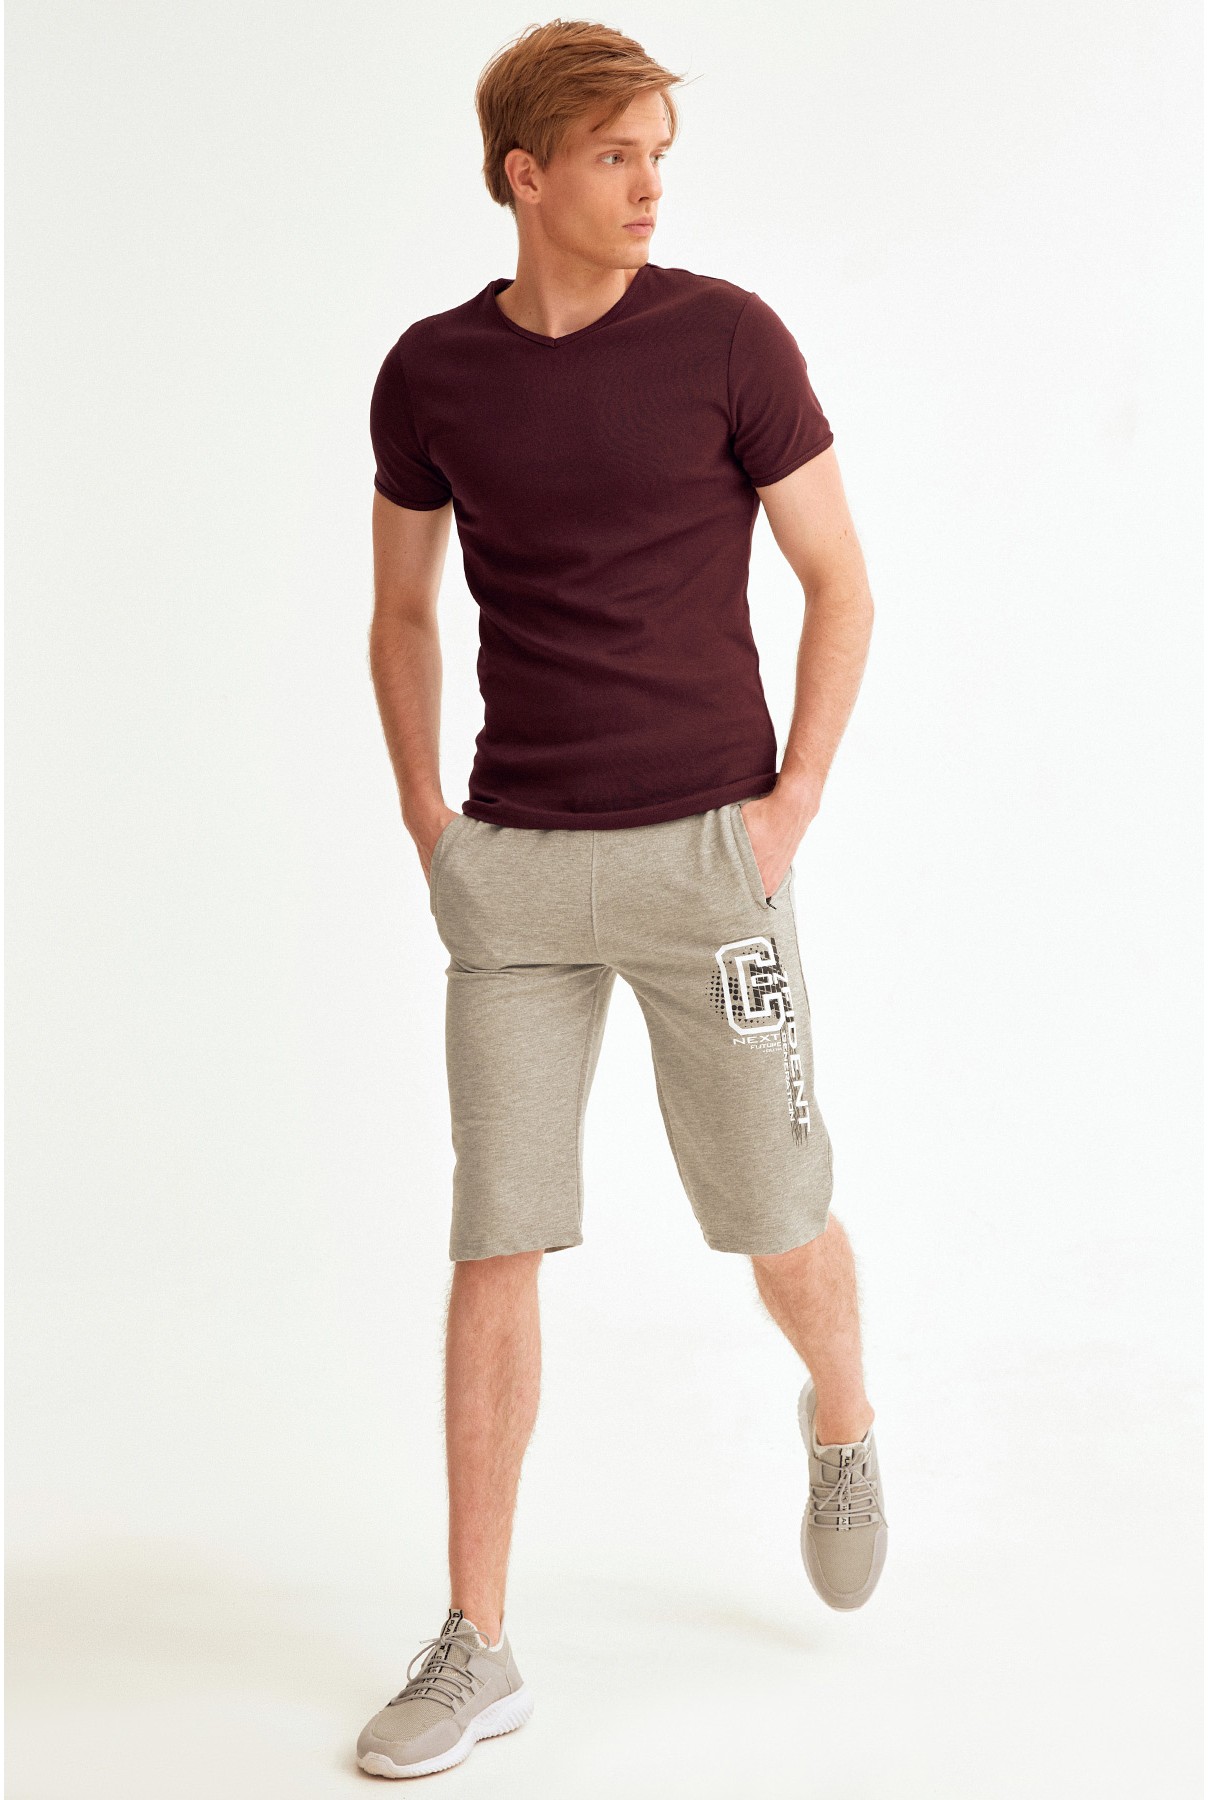 Men's casual shorts-gray